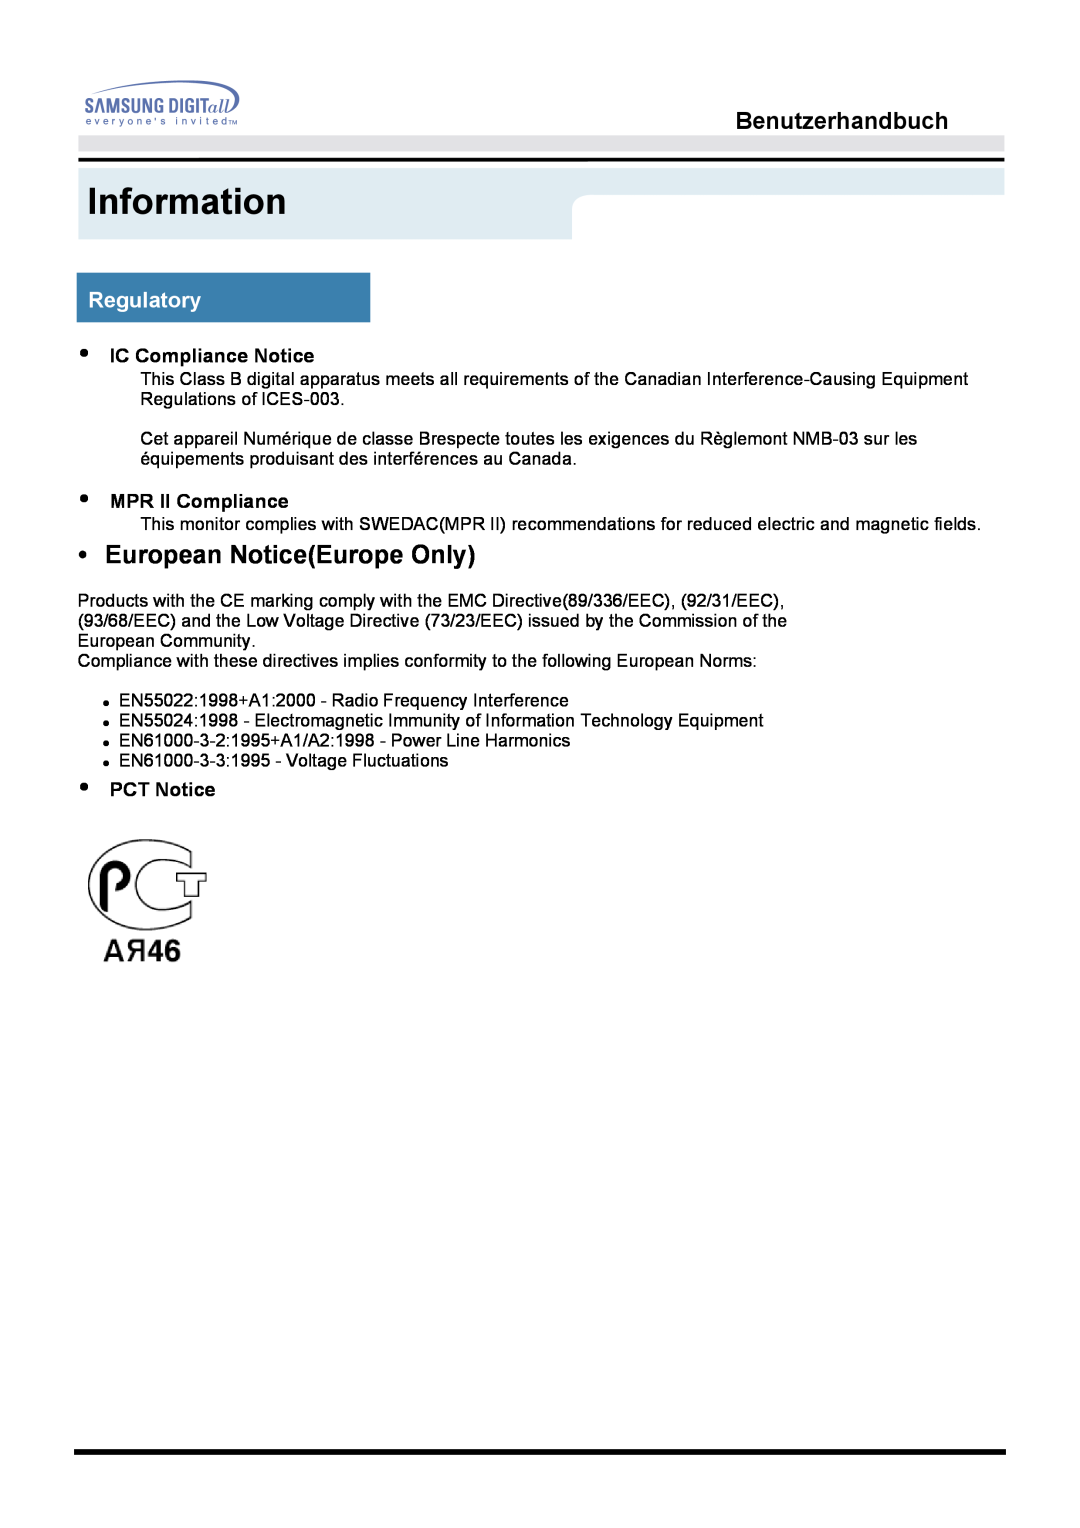 Samsung MO17ESDS/EDC manual Information, European NoticeEurope Only, Benutzerhandbuch, Regulatory, IC Compliance Notice 